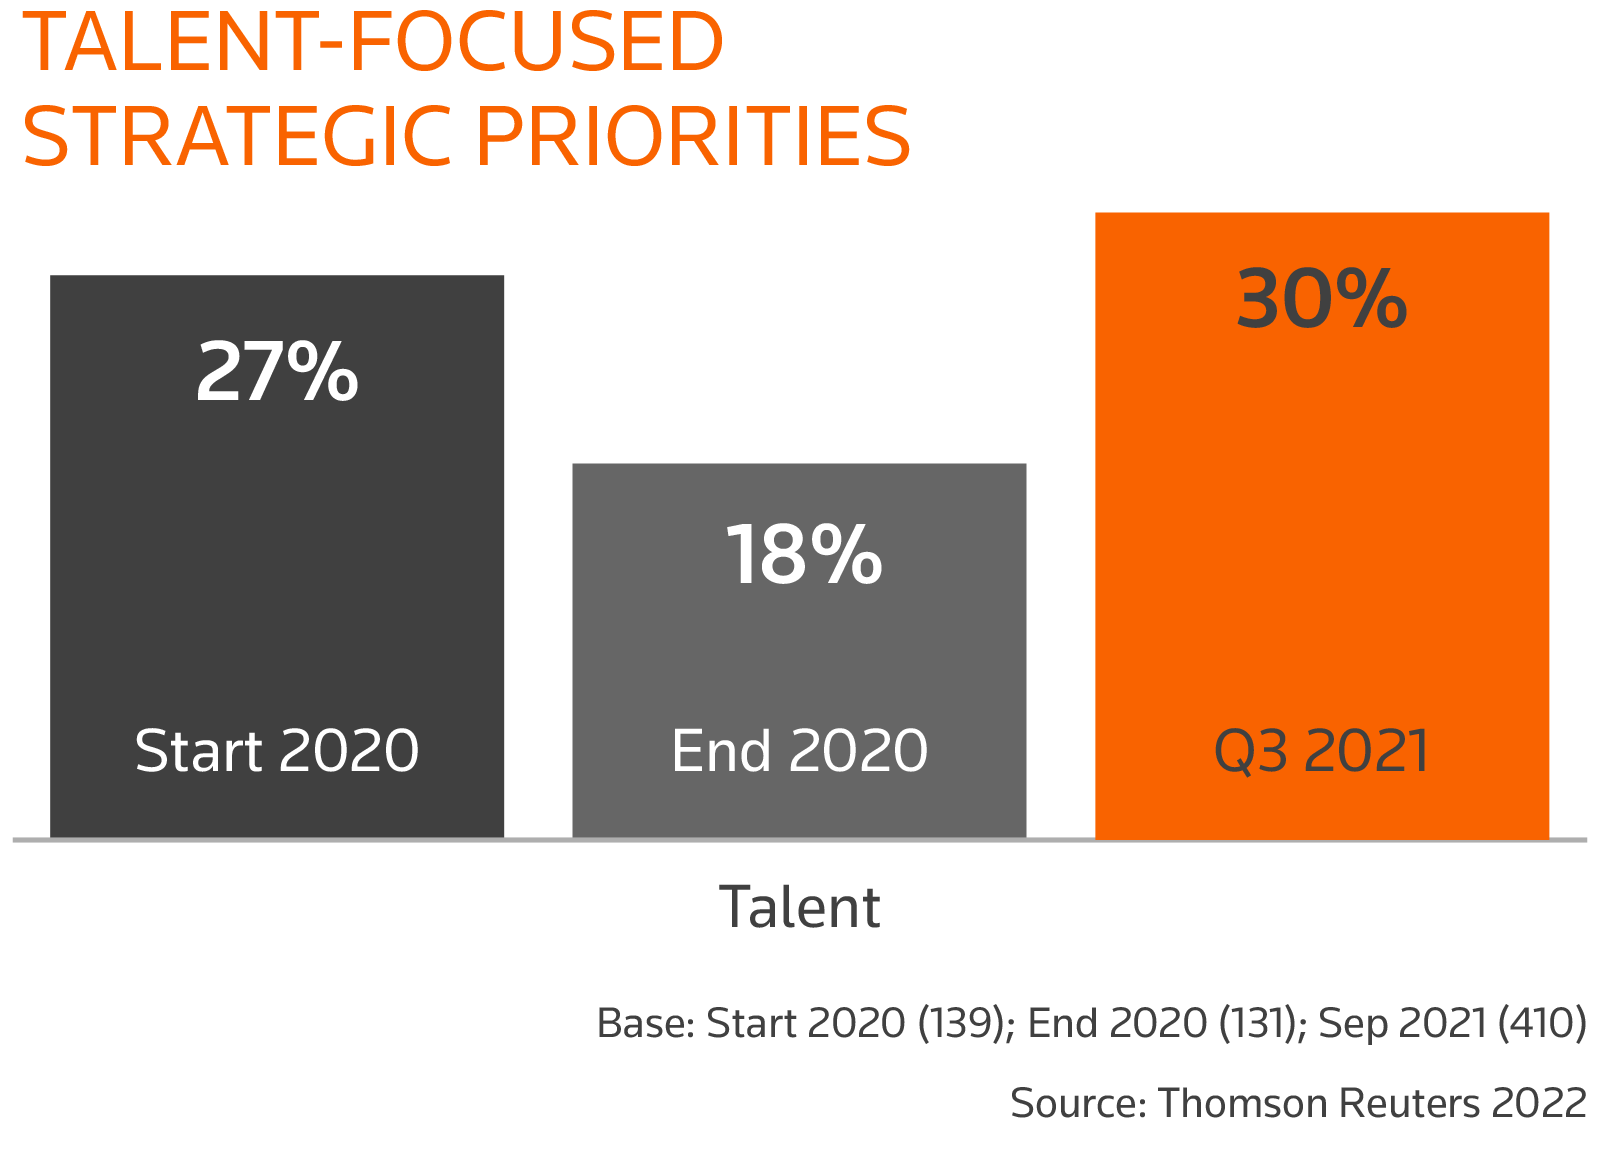 talent-focused strategic priorities chart